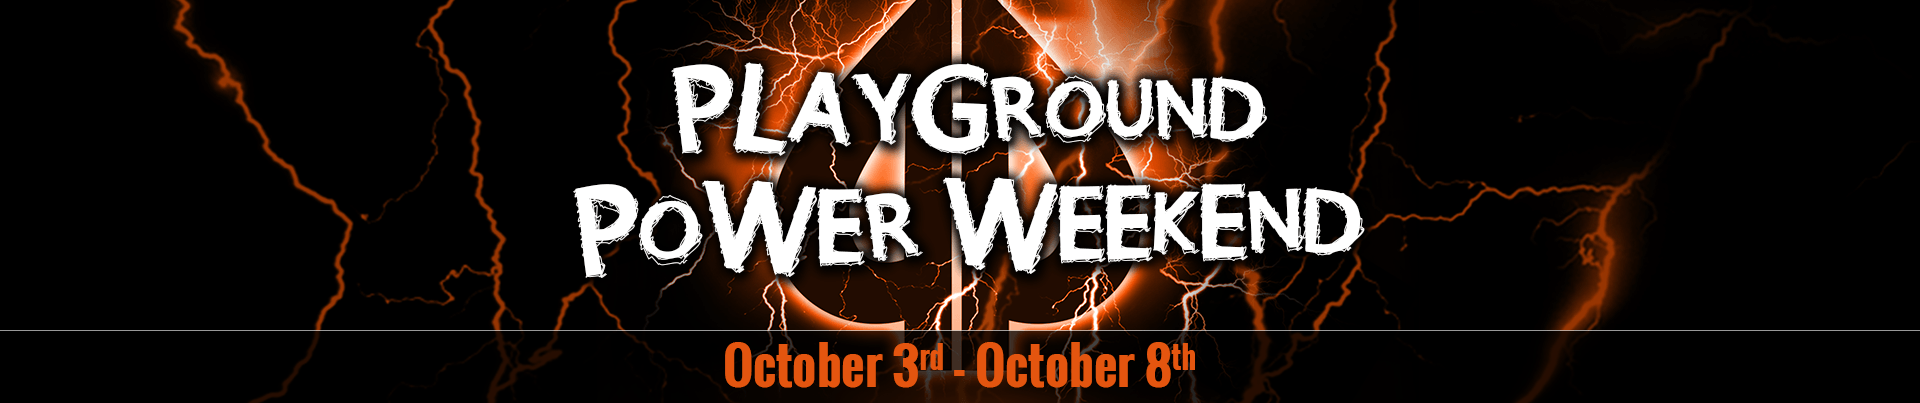 Playground Power Weekend October 2018